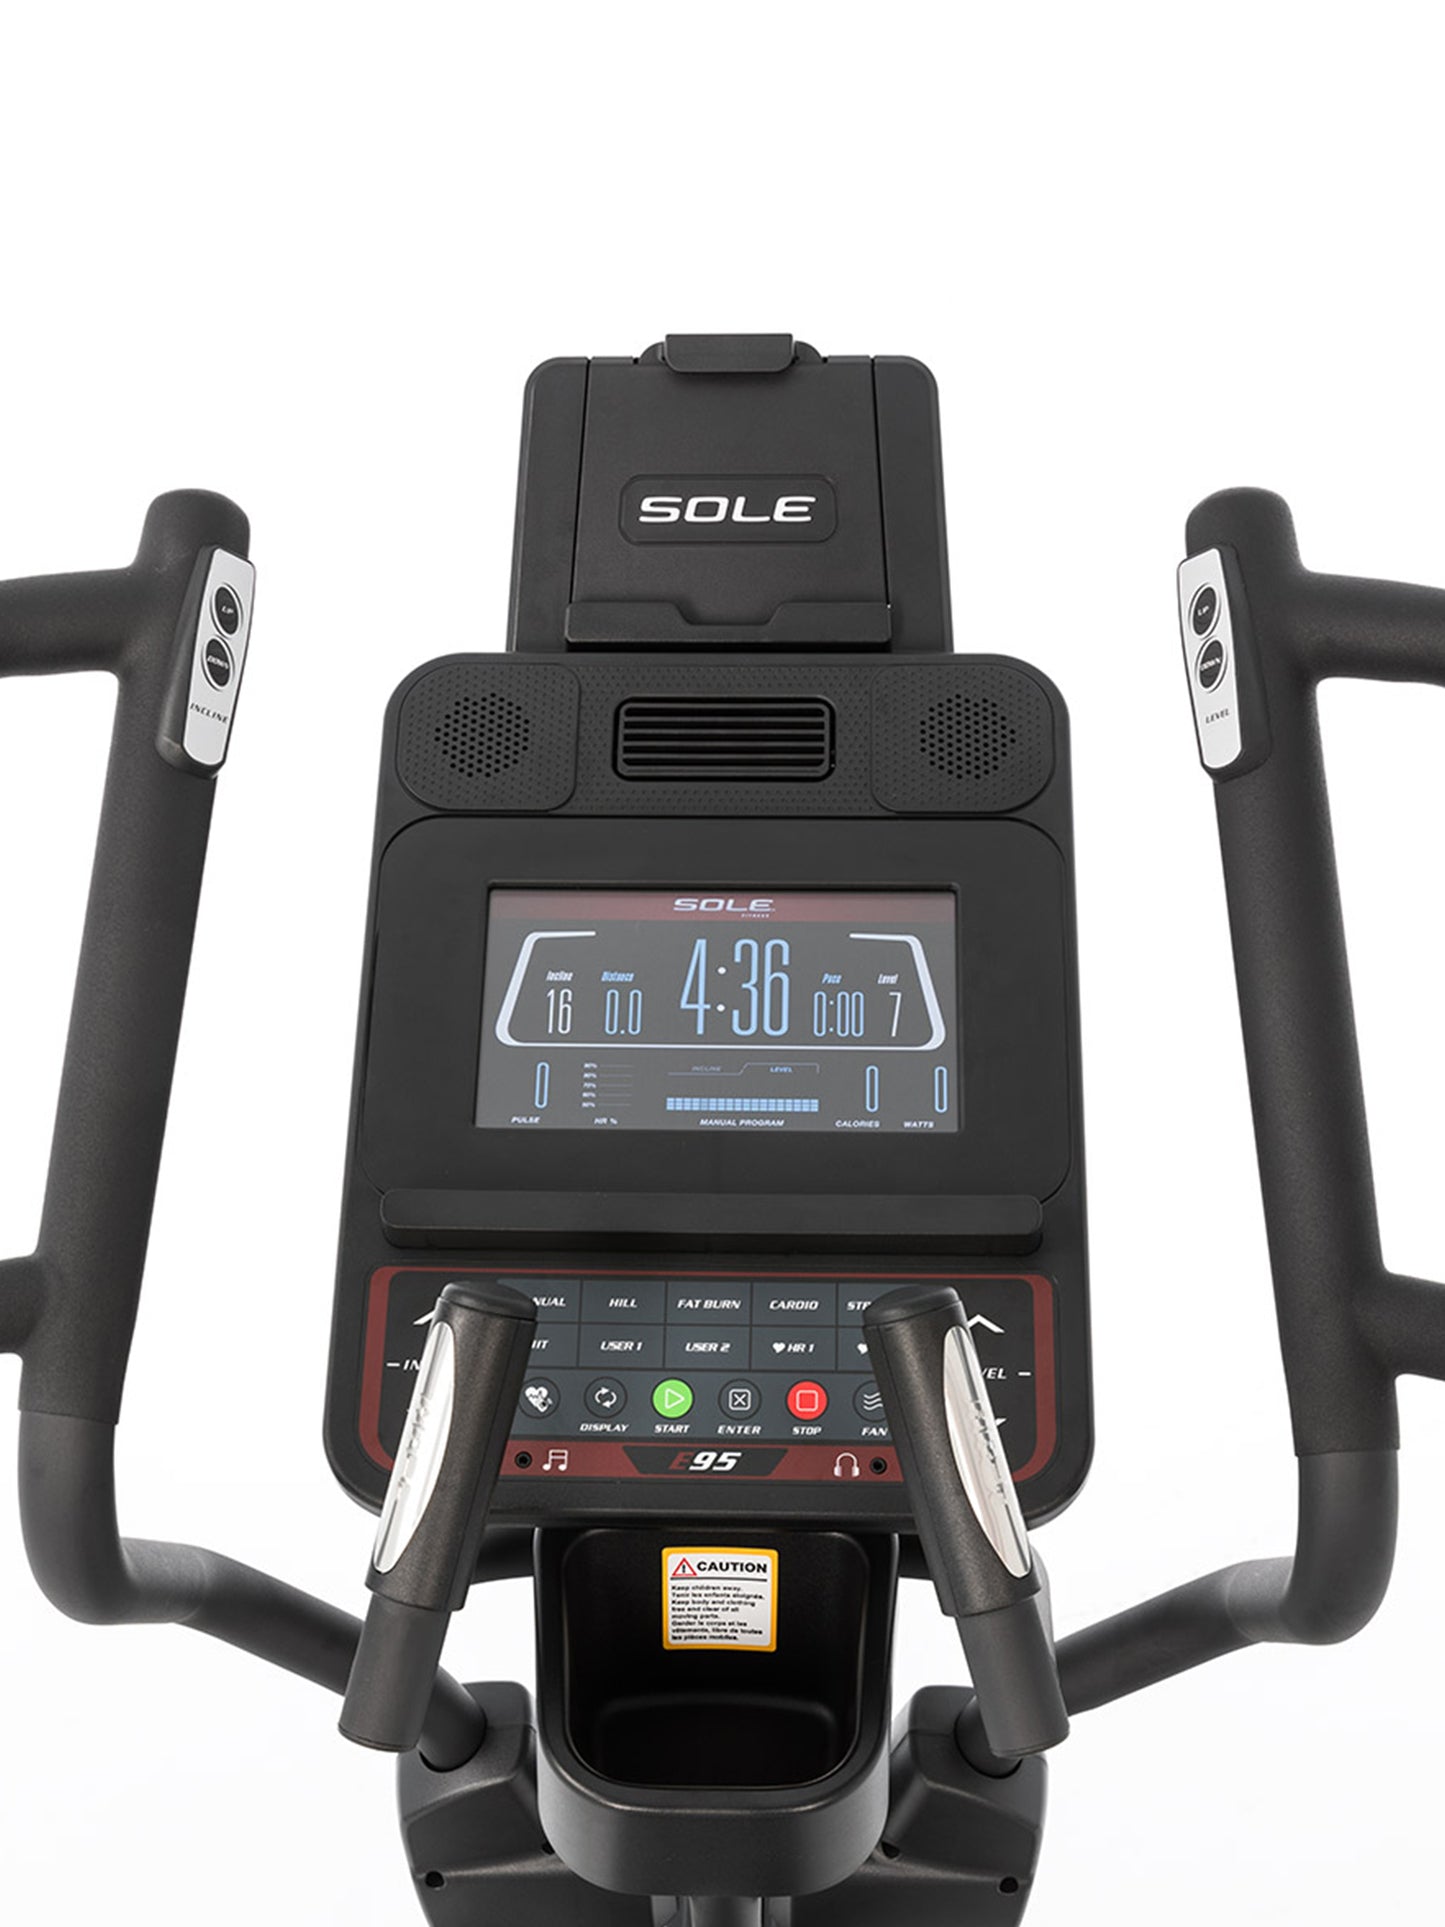 Sole Fitness E95 Elliptical Cross Trainer